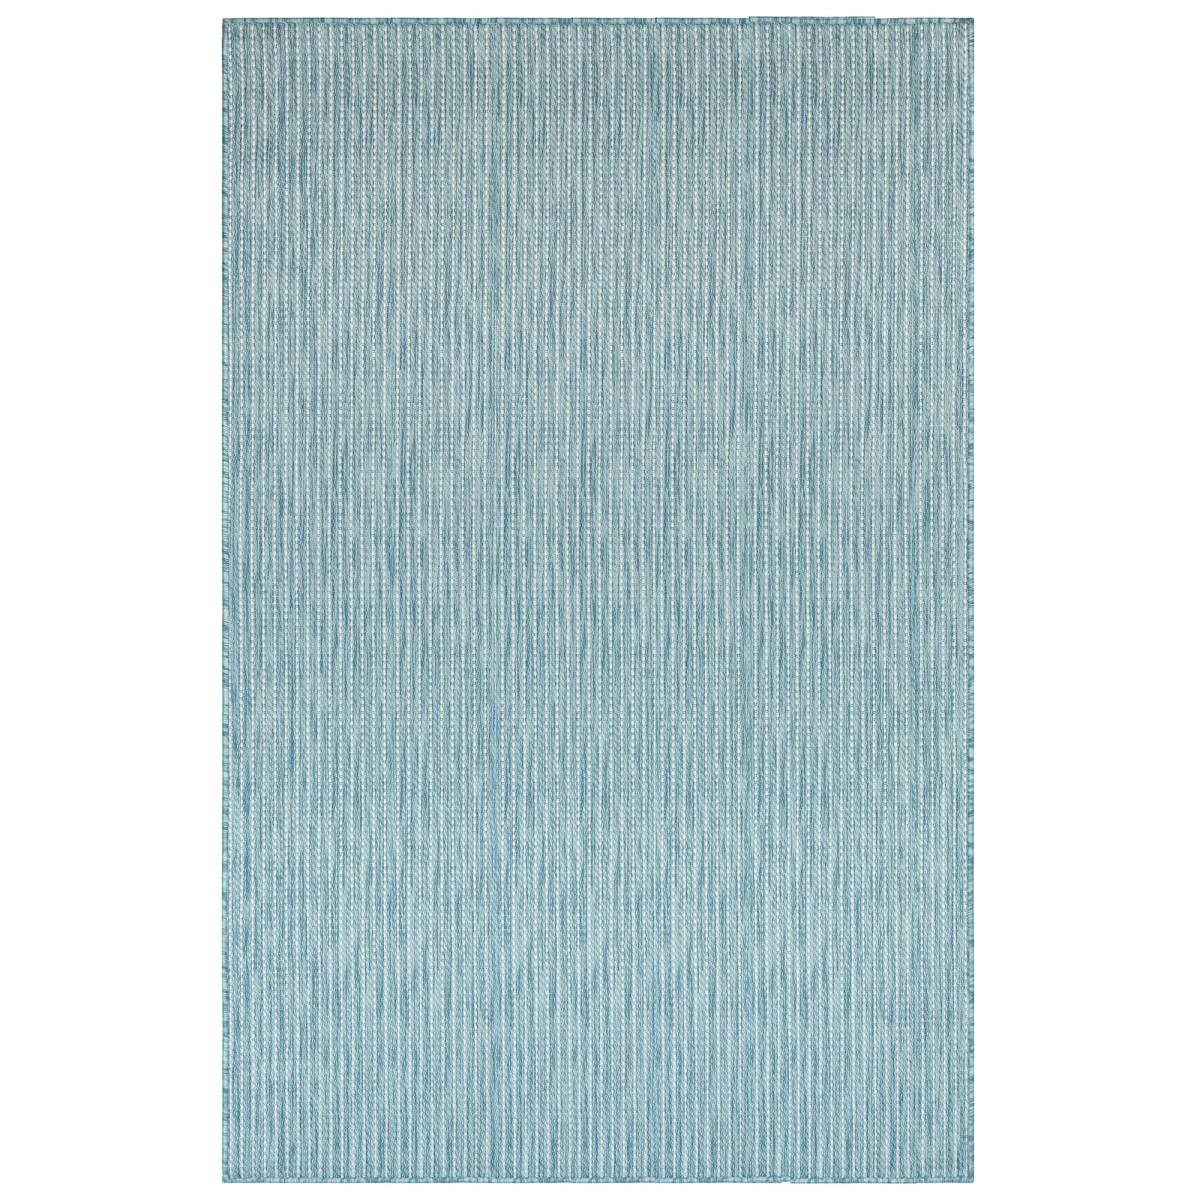 Trans-ocean Imports Cre45842204 39 In. X 59 In. Liora Manne Carmel Texture Stripe Indoor & Outdoor Wilton Woven Rectangle Rug - Aqua